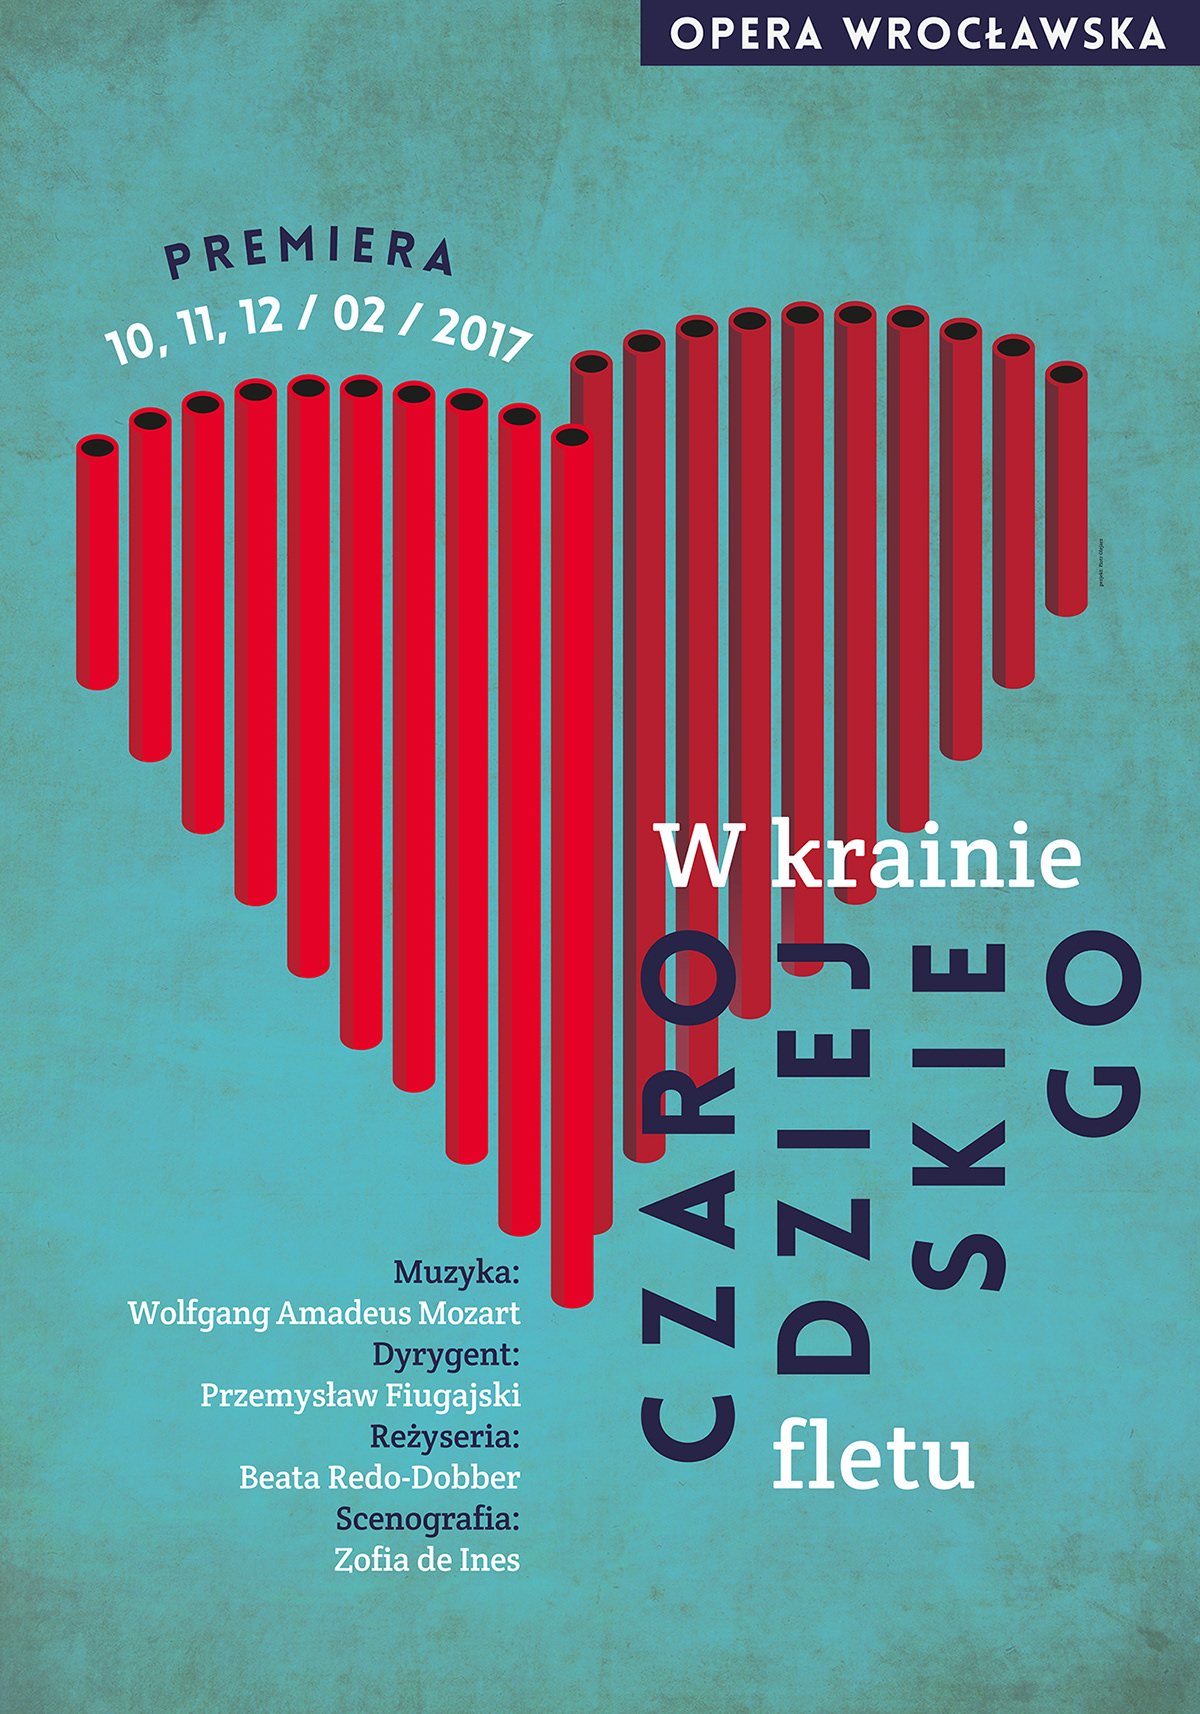 posters plakaty opera Opera Wrocławska the wroclaw opera art Exhibition  cultural performances typography  